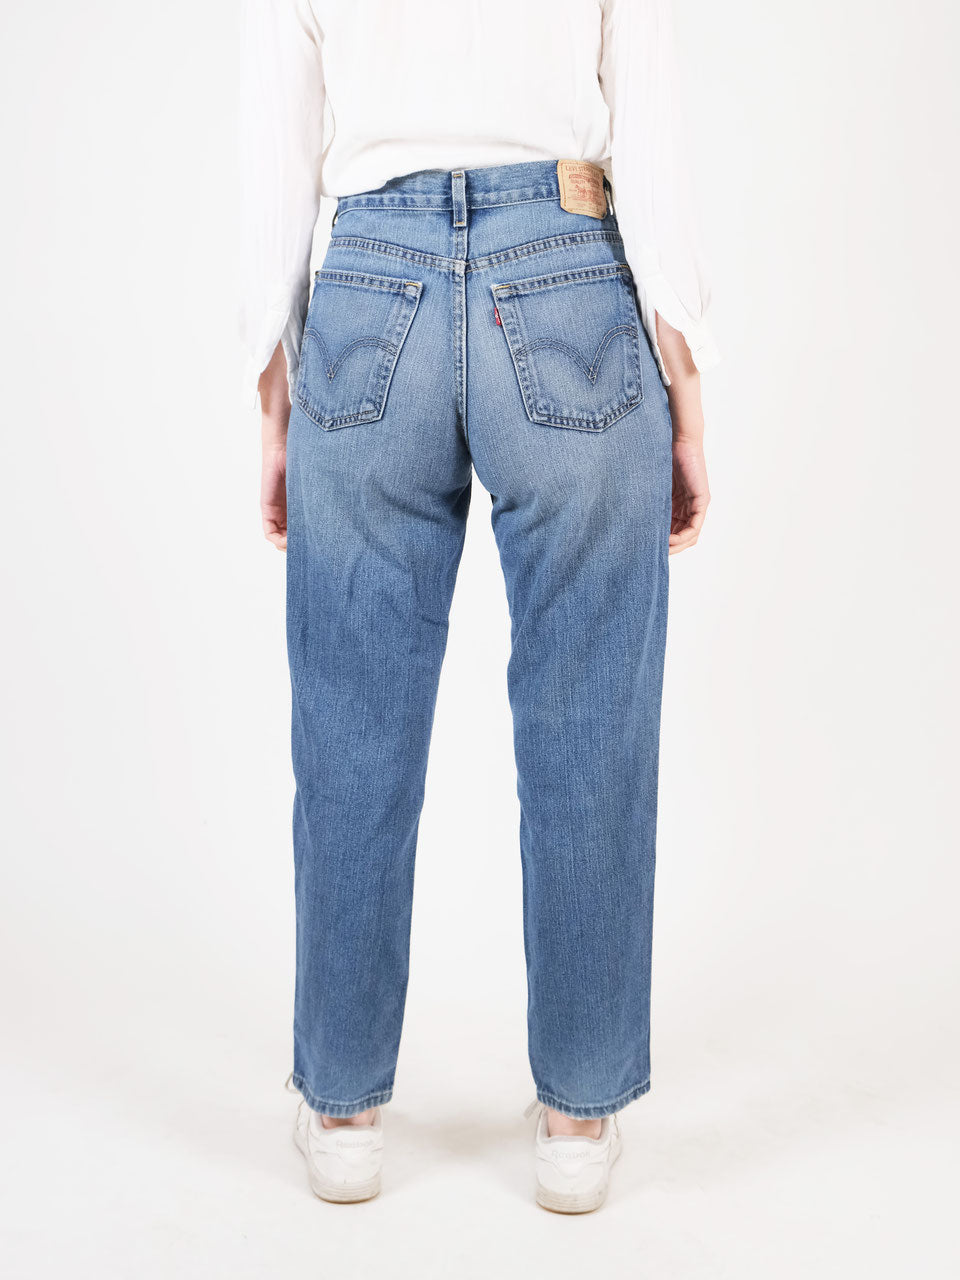 Levi's Jeans 550 w29